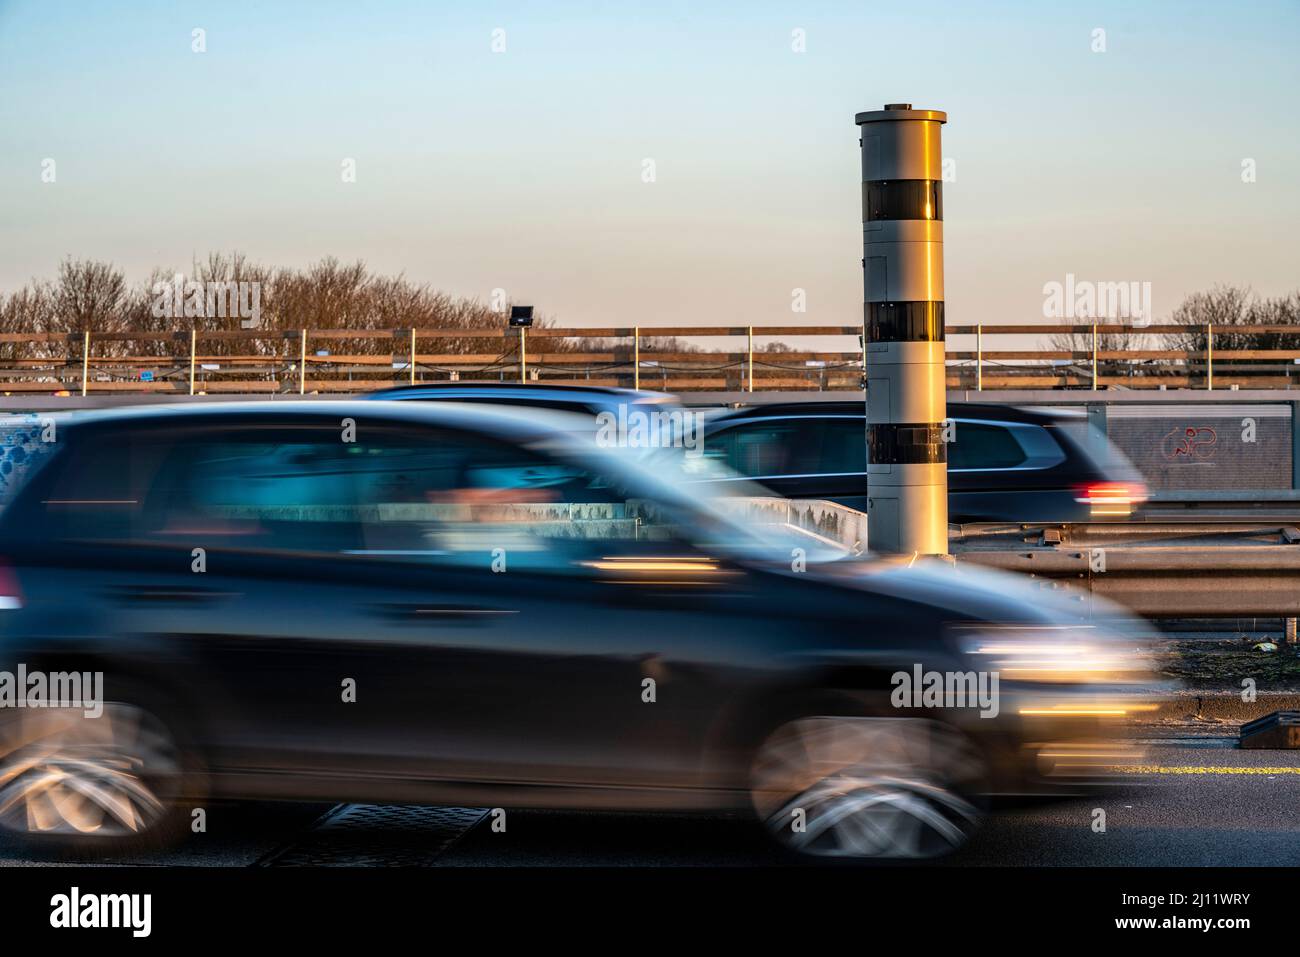 Speed camera, radar speed monitoring, on the A40 motorway, on the Neuenkamp Rhine bridge, Duisburg, NRW, Germany, Speed camera, radar speed monitoring Stock Photo